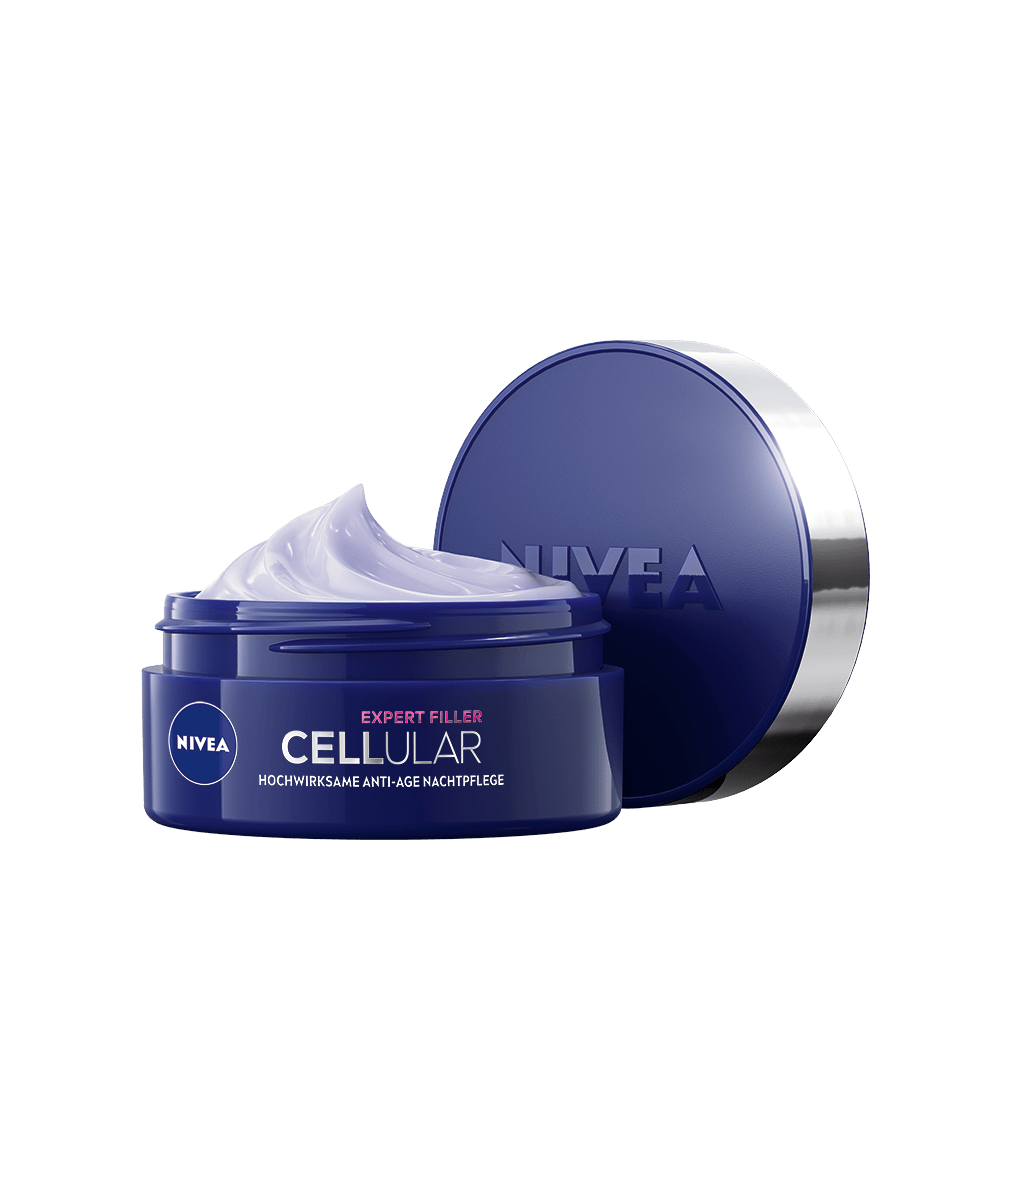 NIVEA Cellular Expert Filler Anti Age Nachtpflege 50 ml